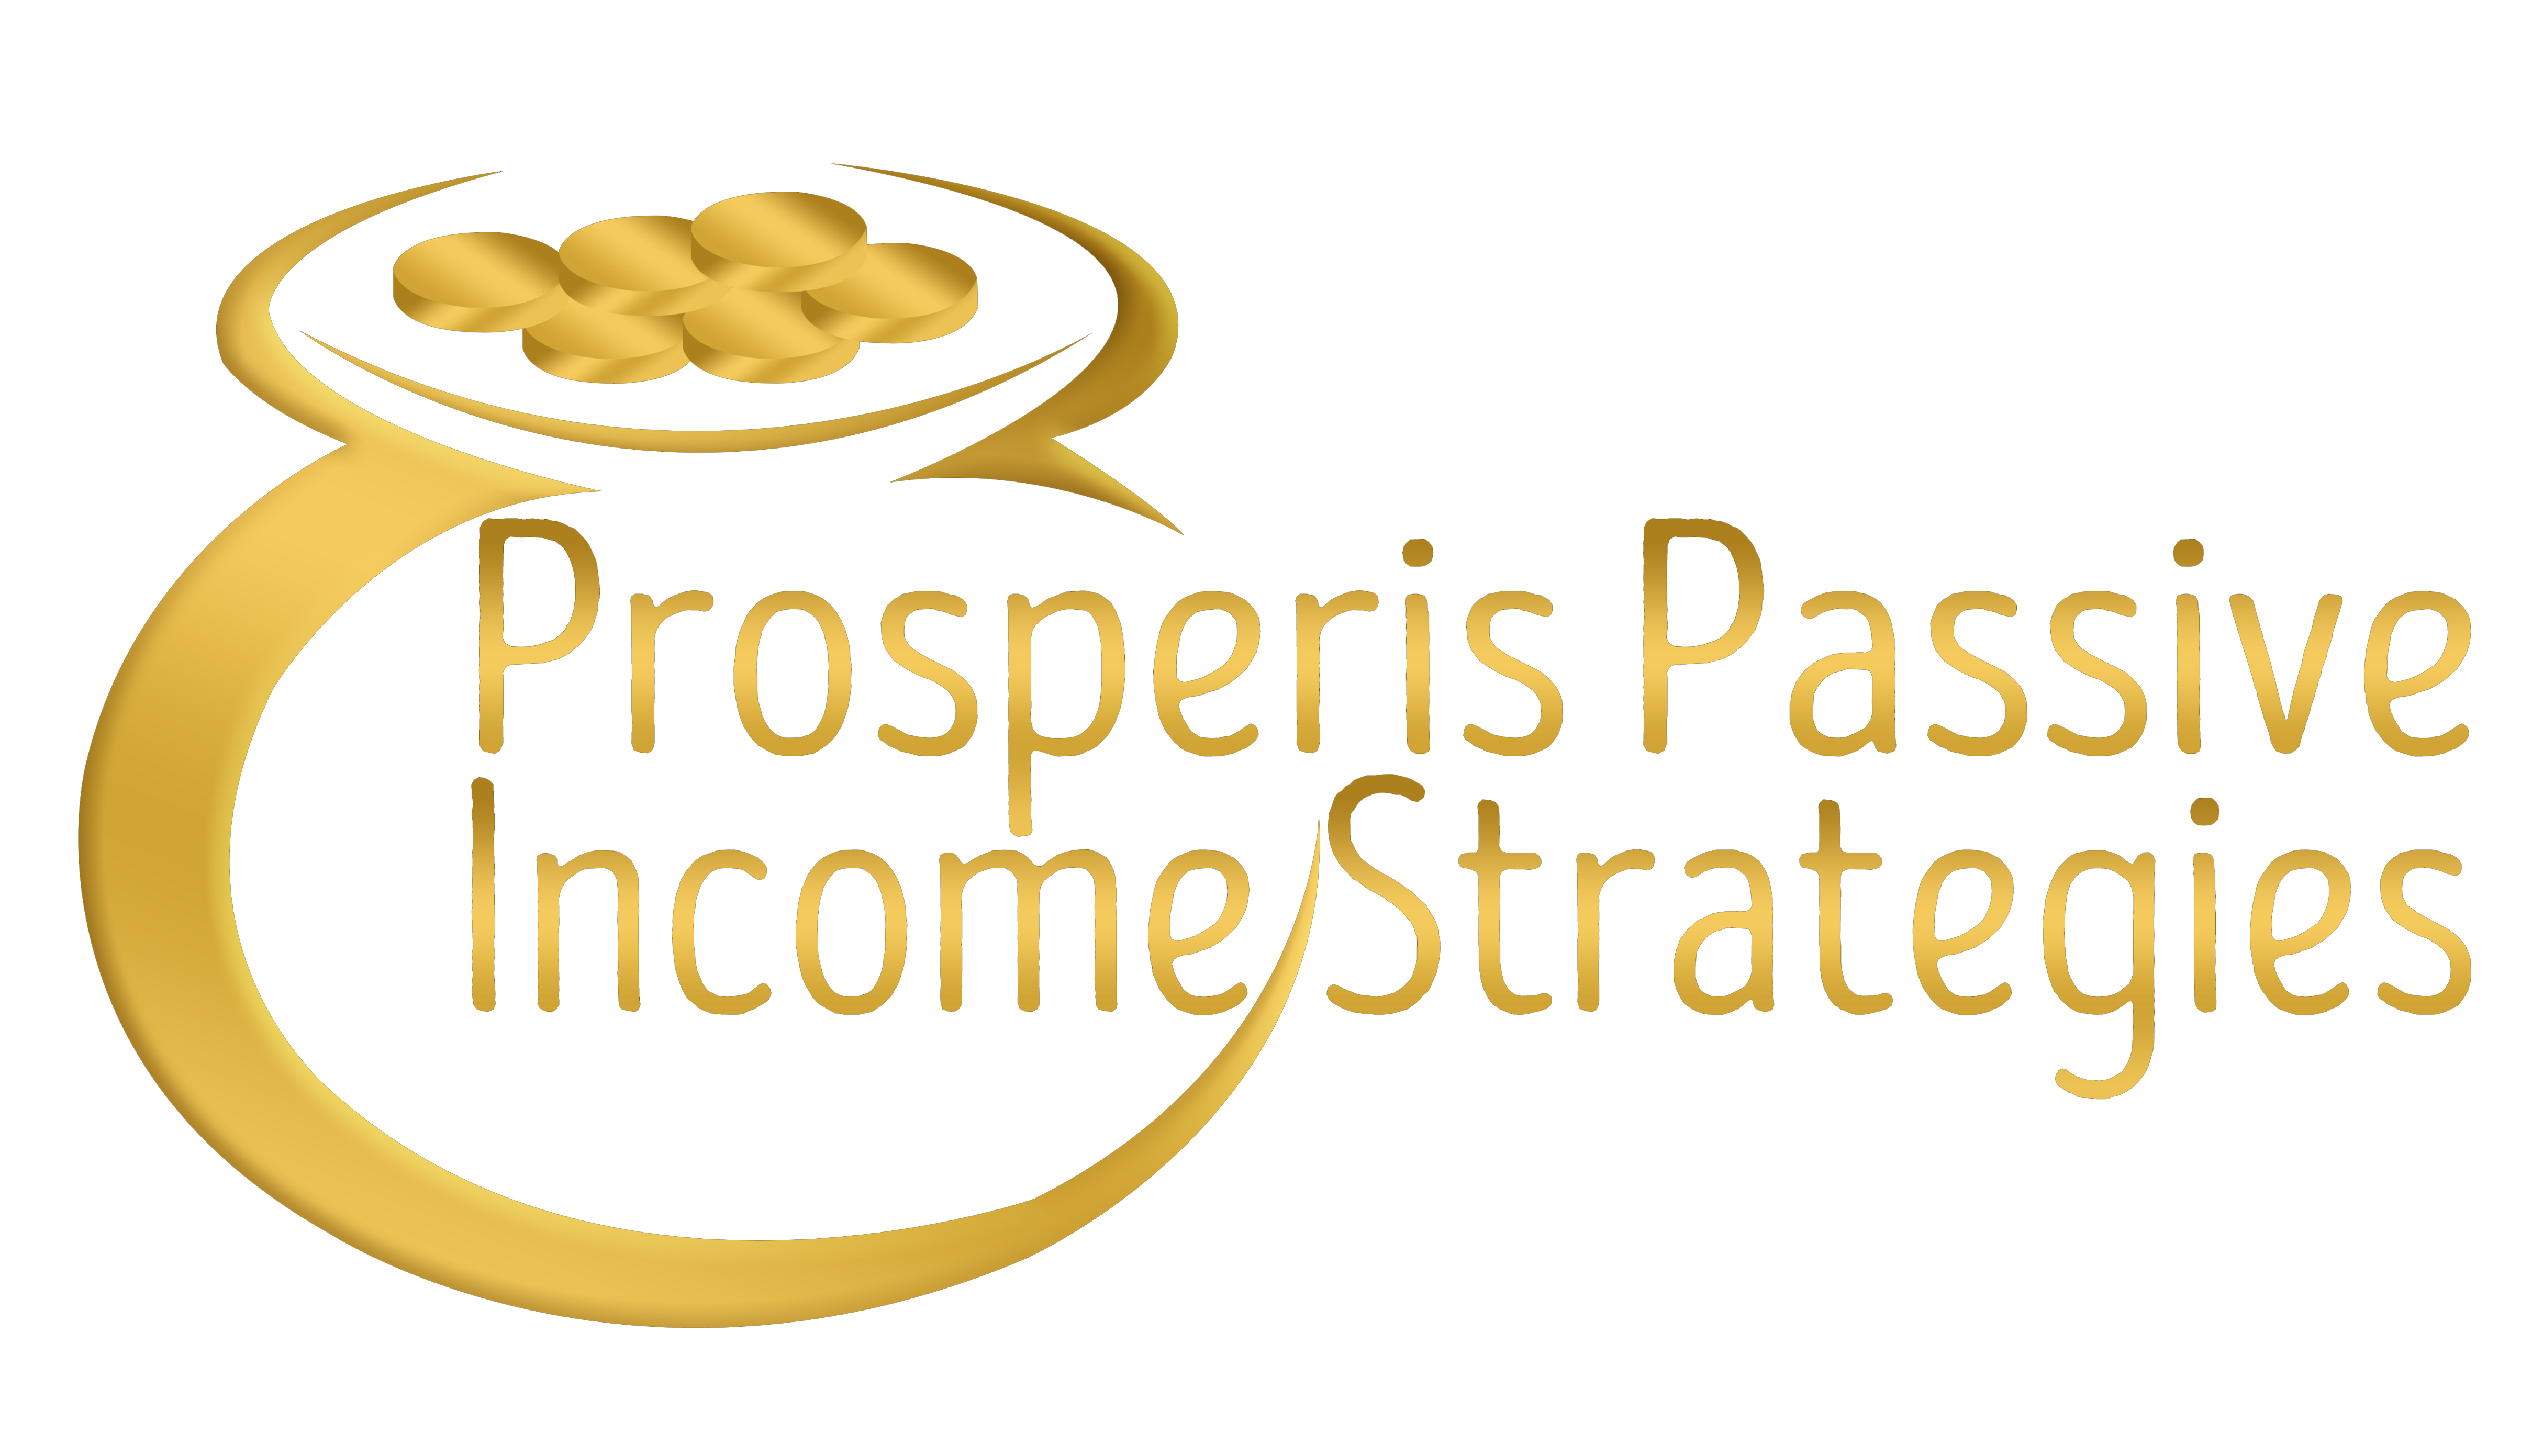 How to make passive income?